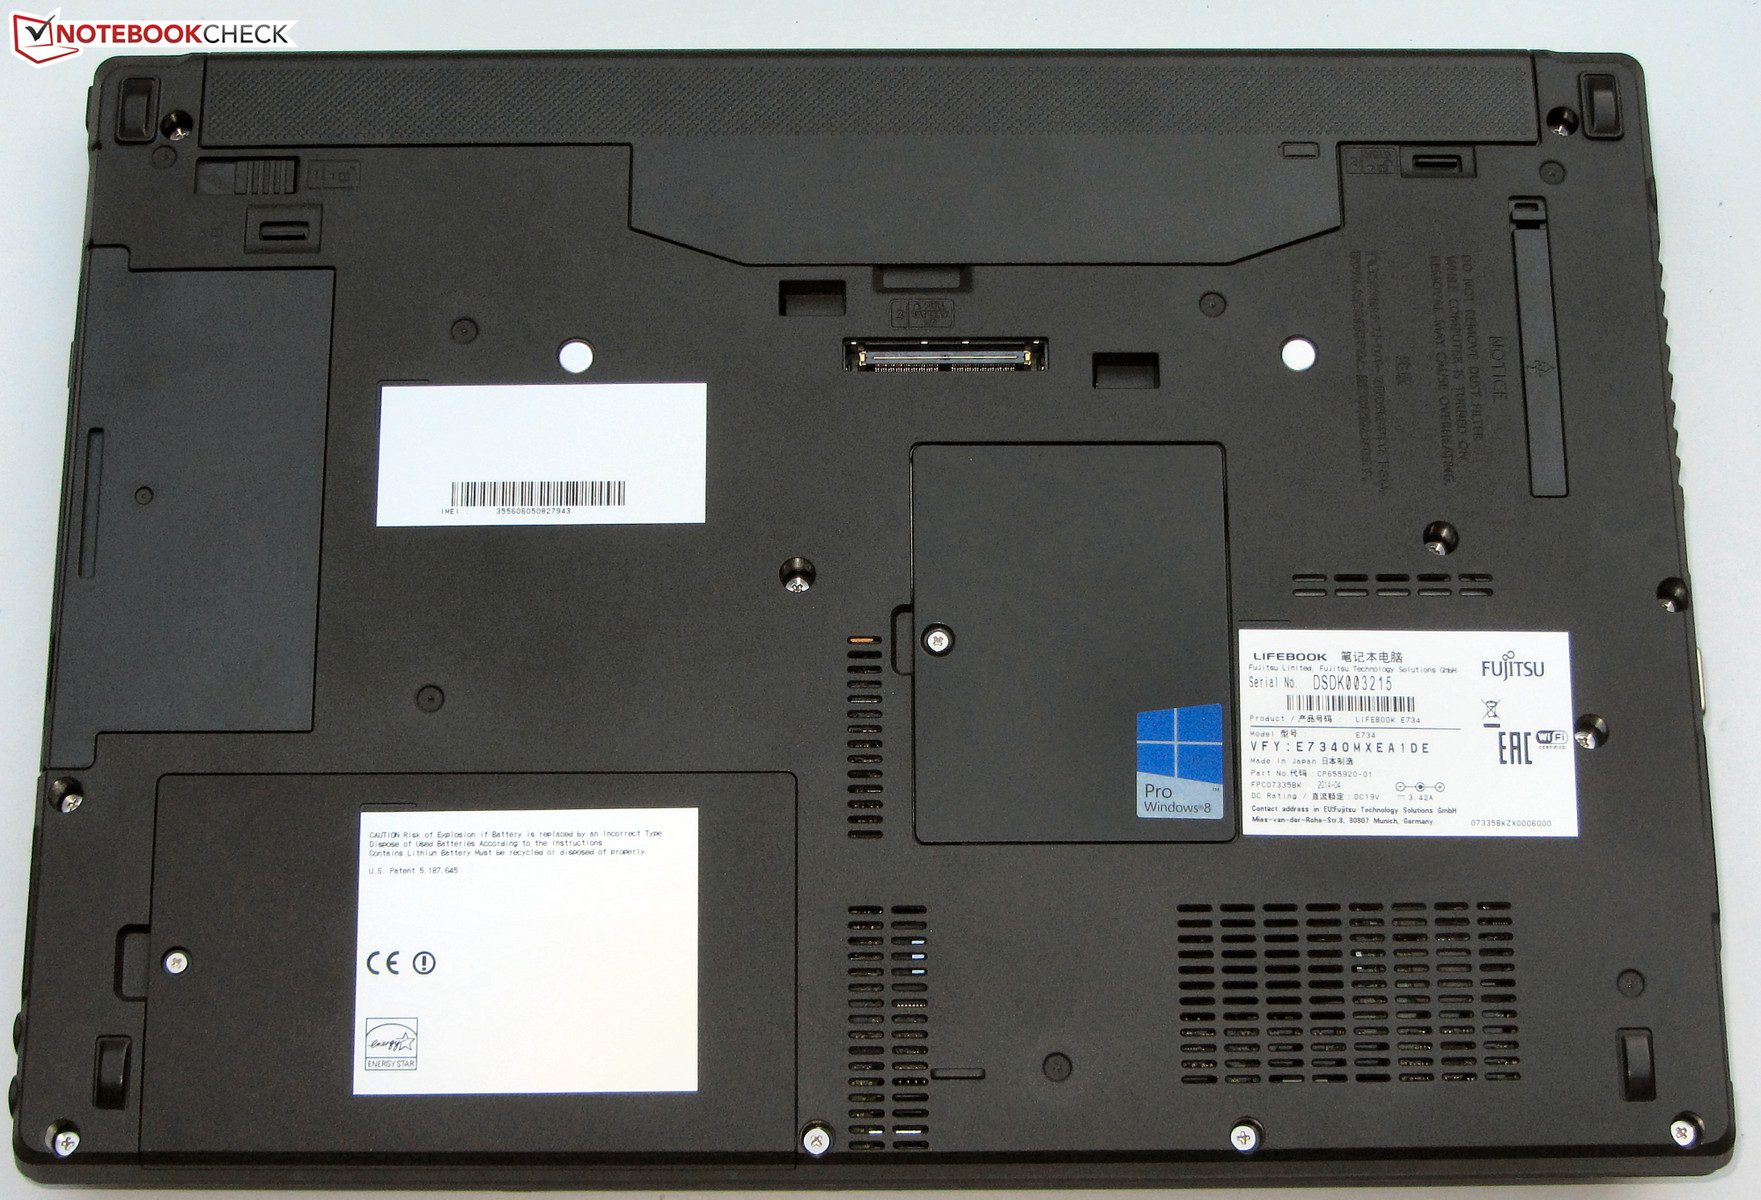 Fujitsu Lifebook E734 (E7340MXEA1DE) Notebook Review Update